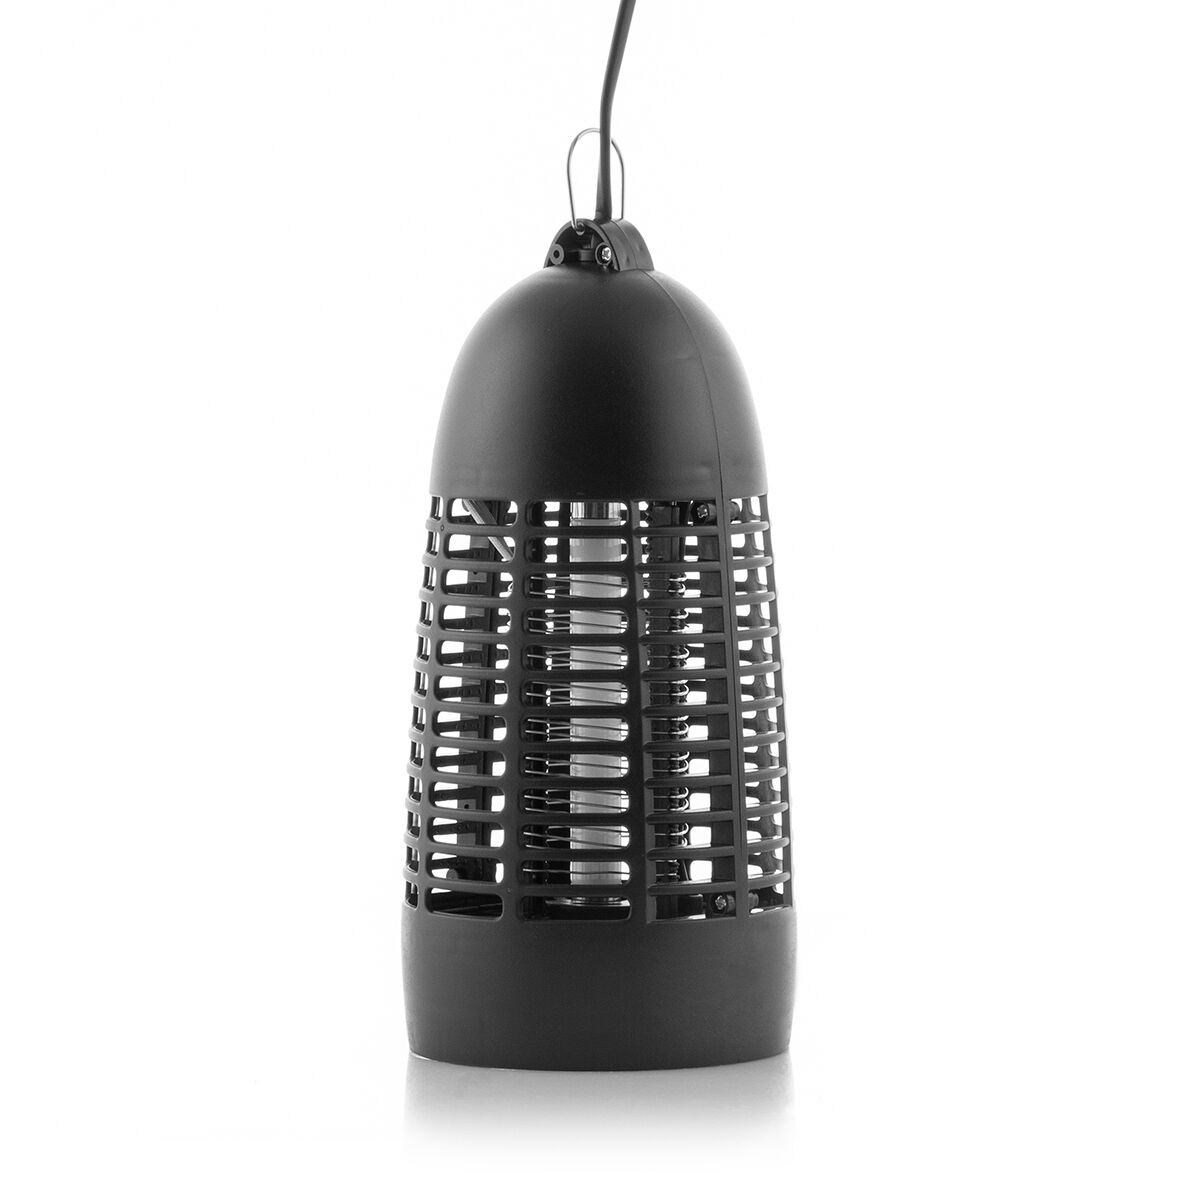  InnovaGoods Anti-Mosquito Lamp KL-1600 4W Black 